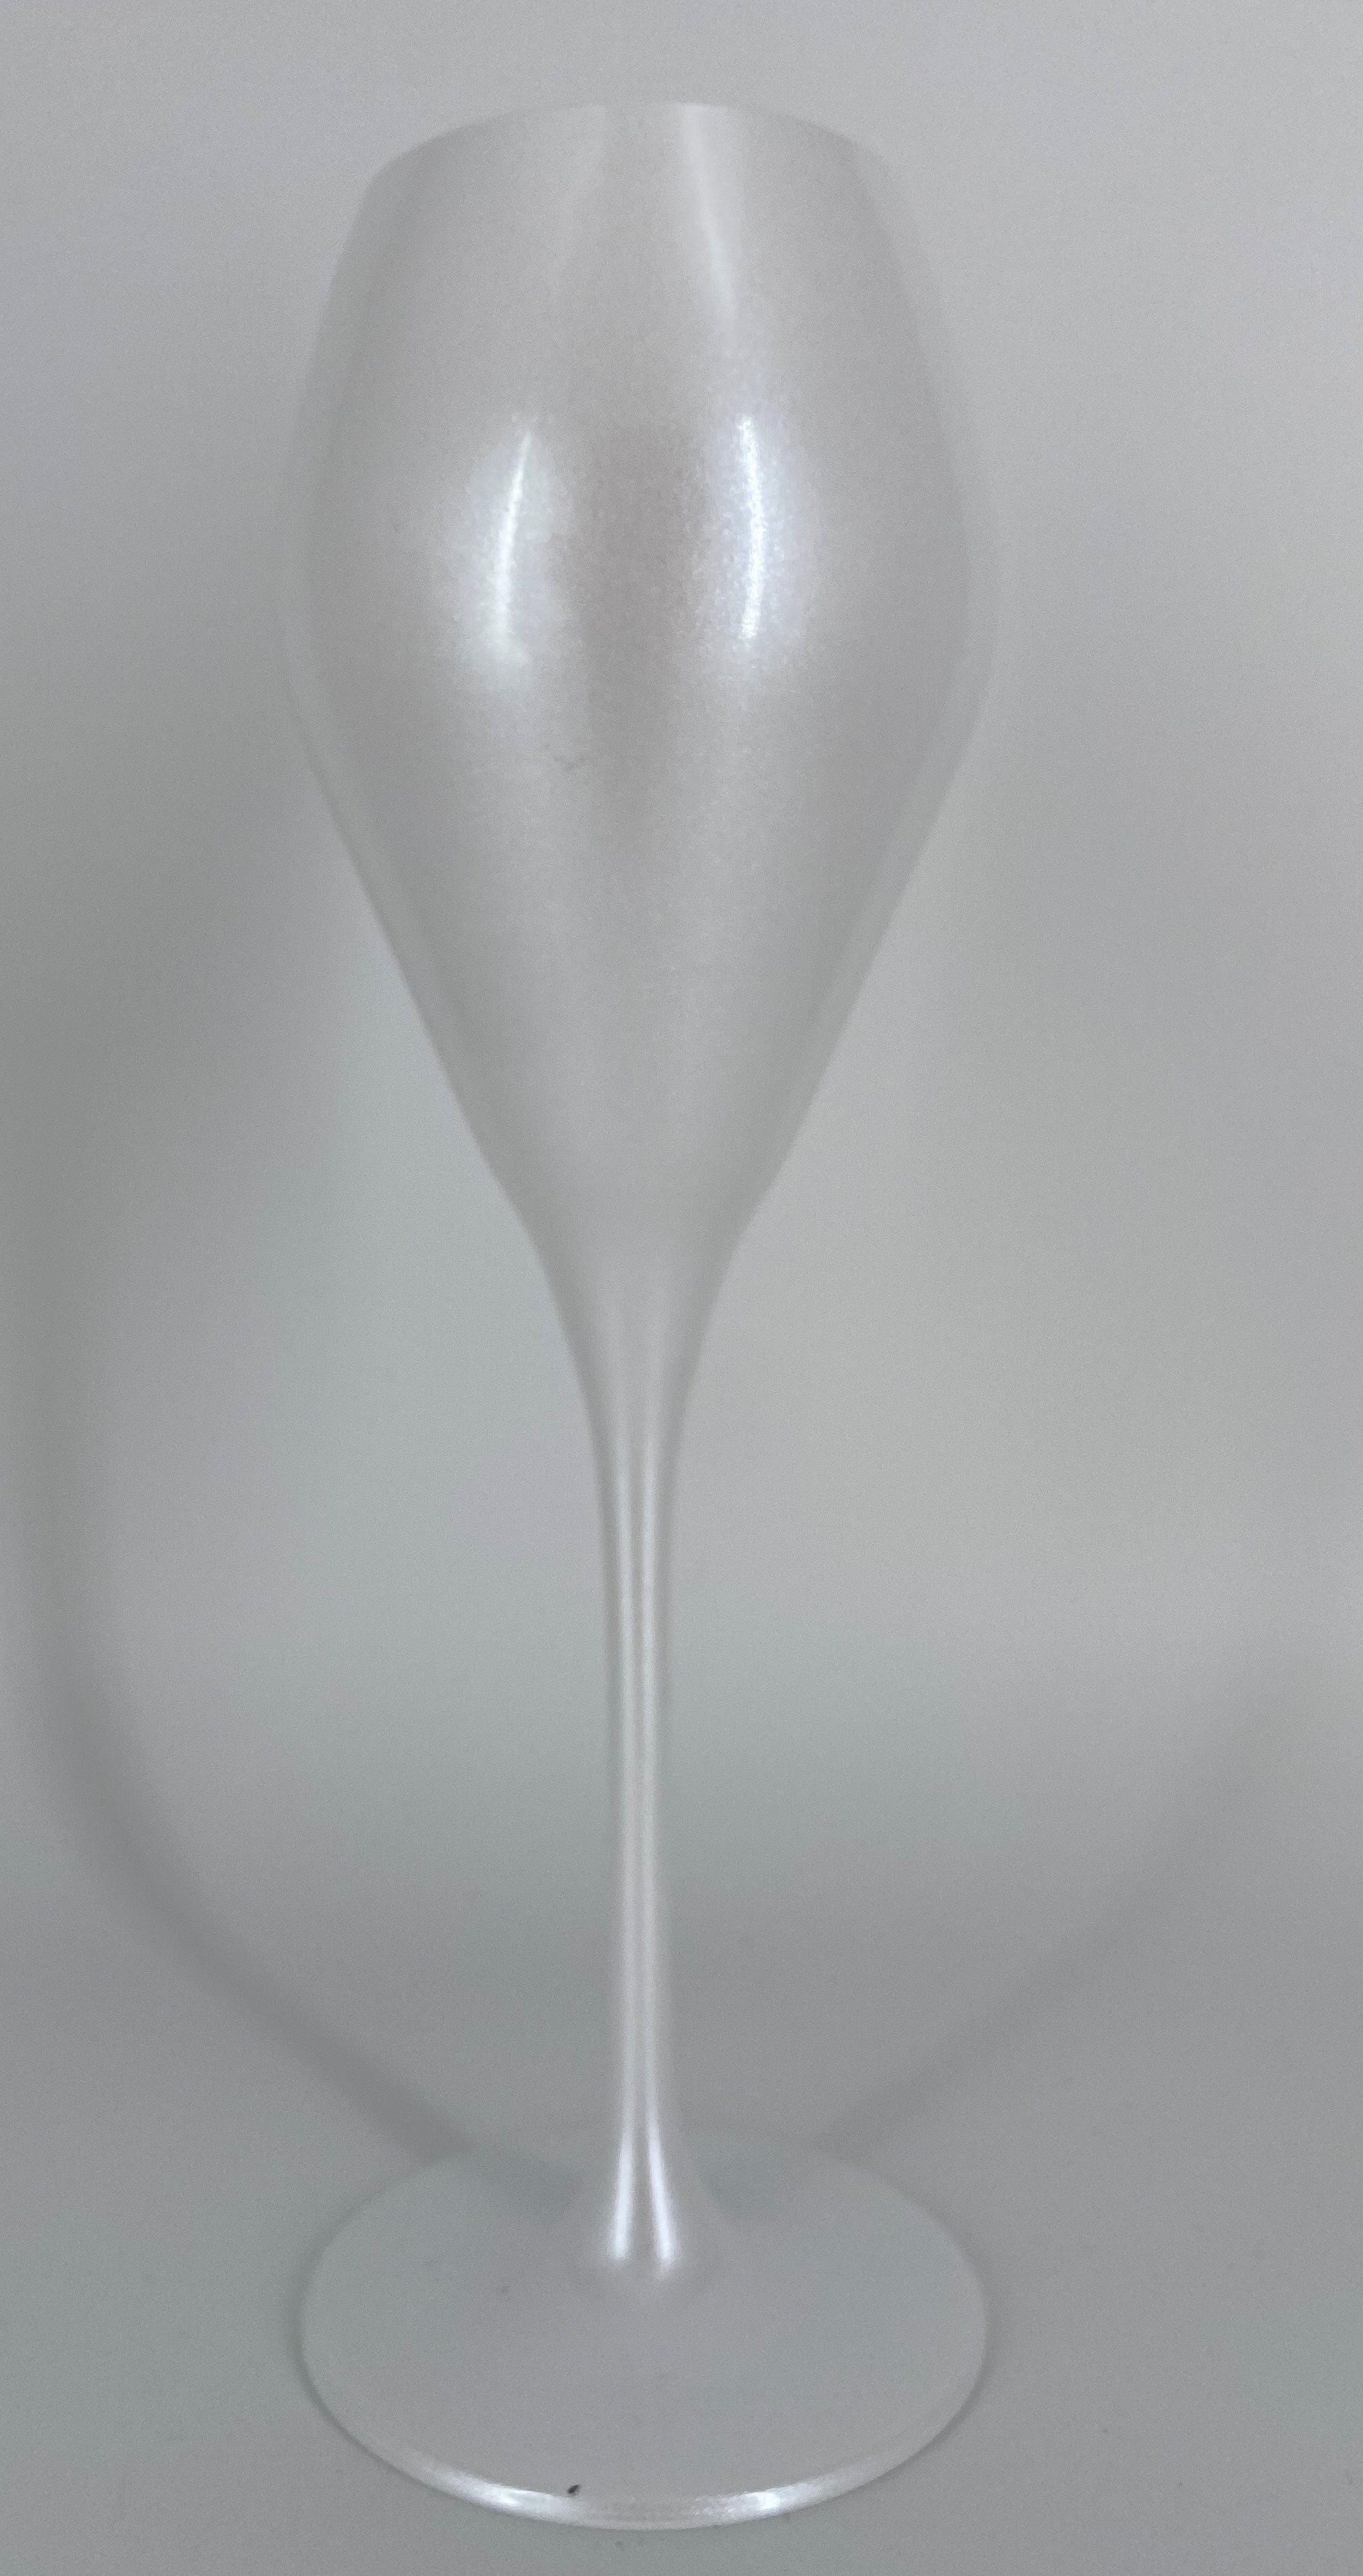 EXCLUSIV Prosecco Glas weiß -6Stk.